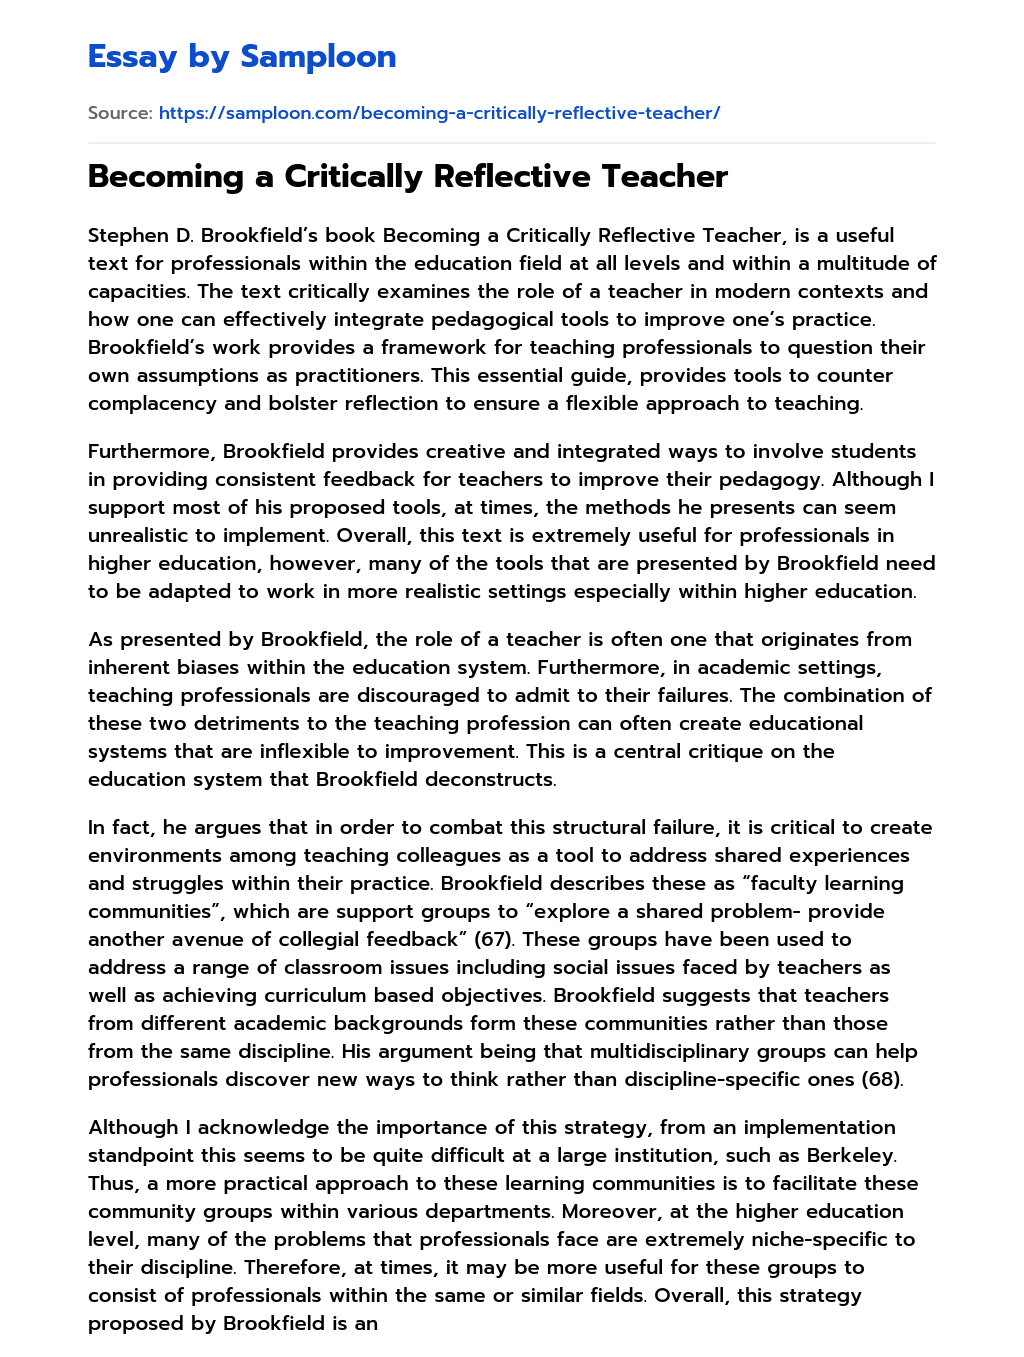 Becoming a Critically Reflective Teacher essay